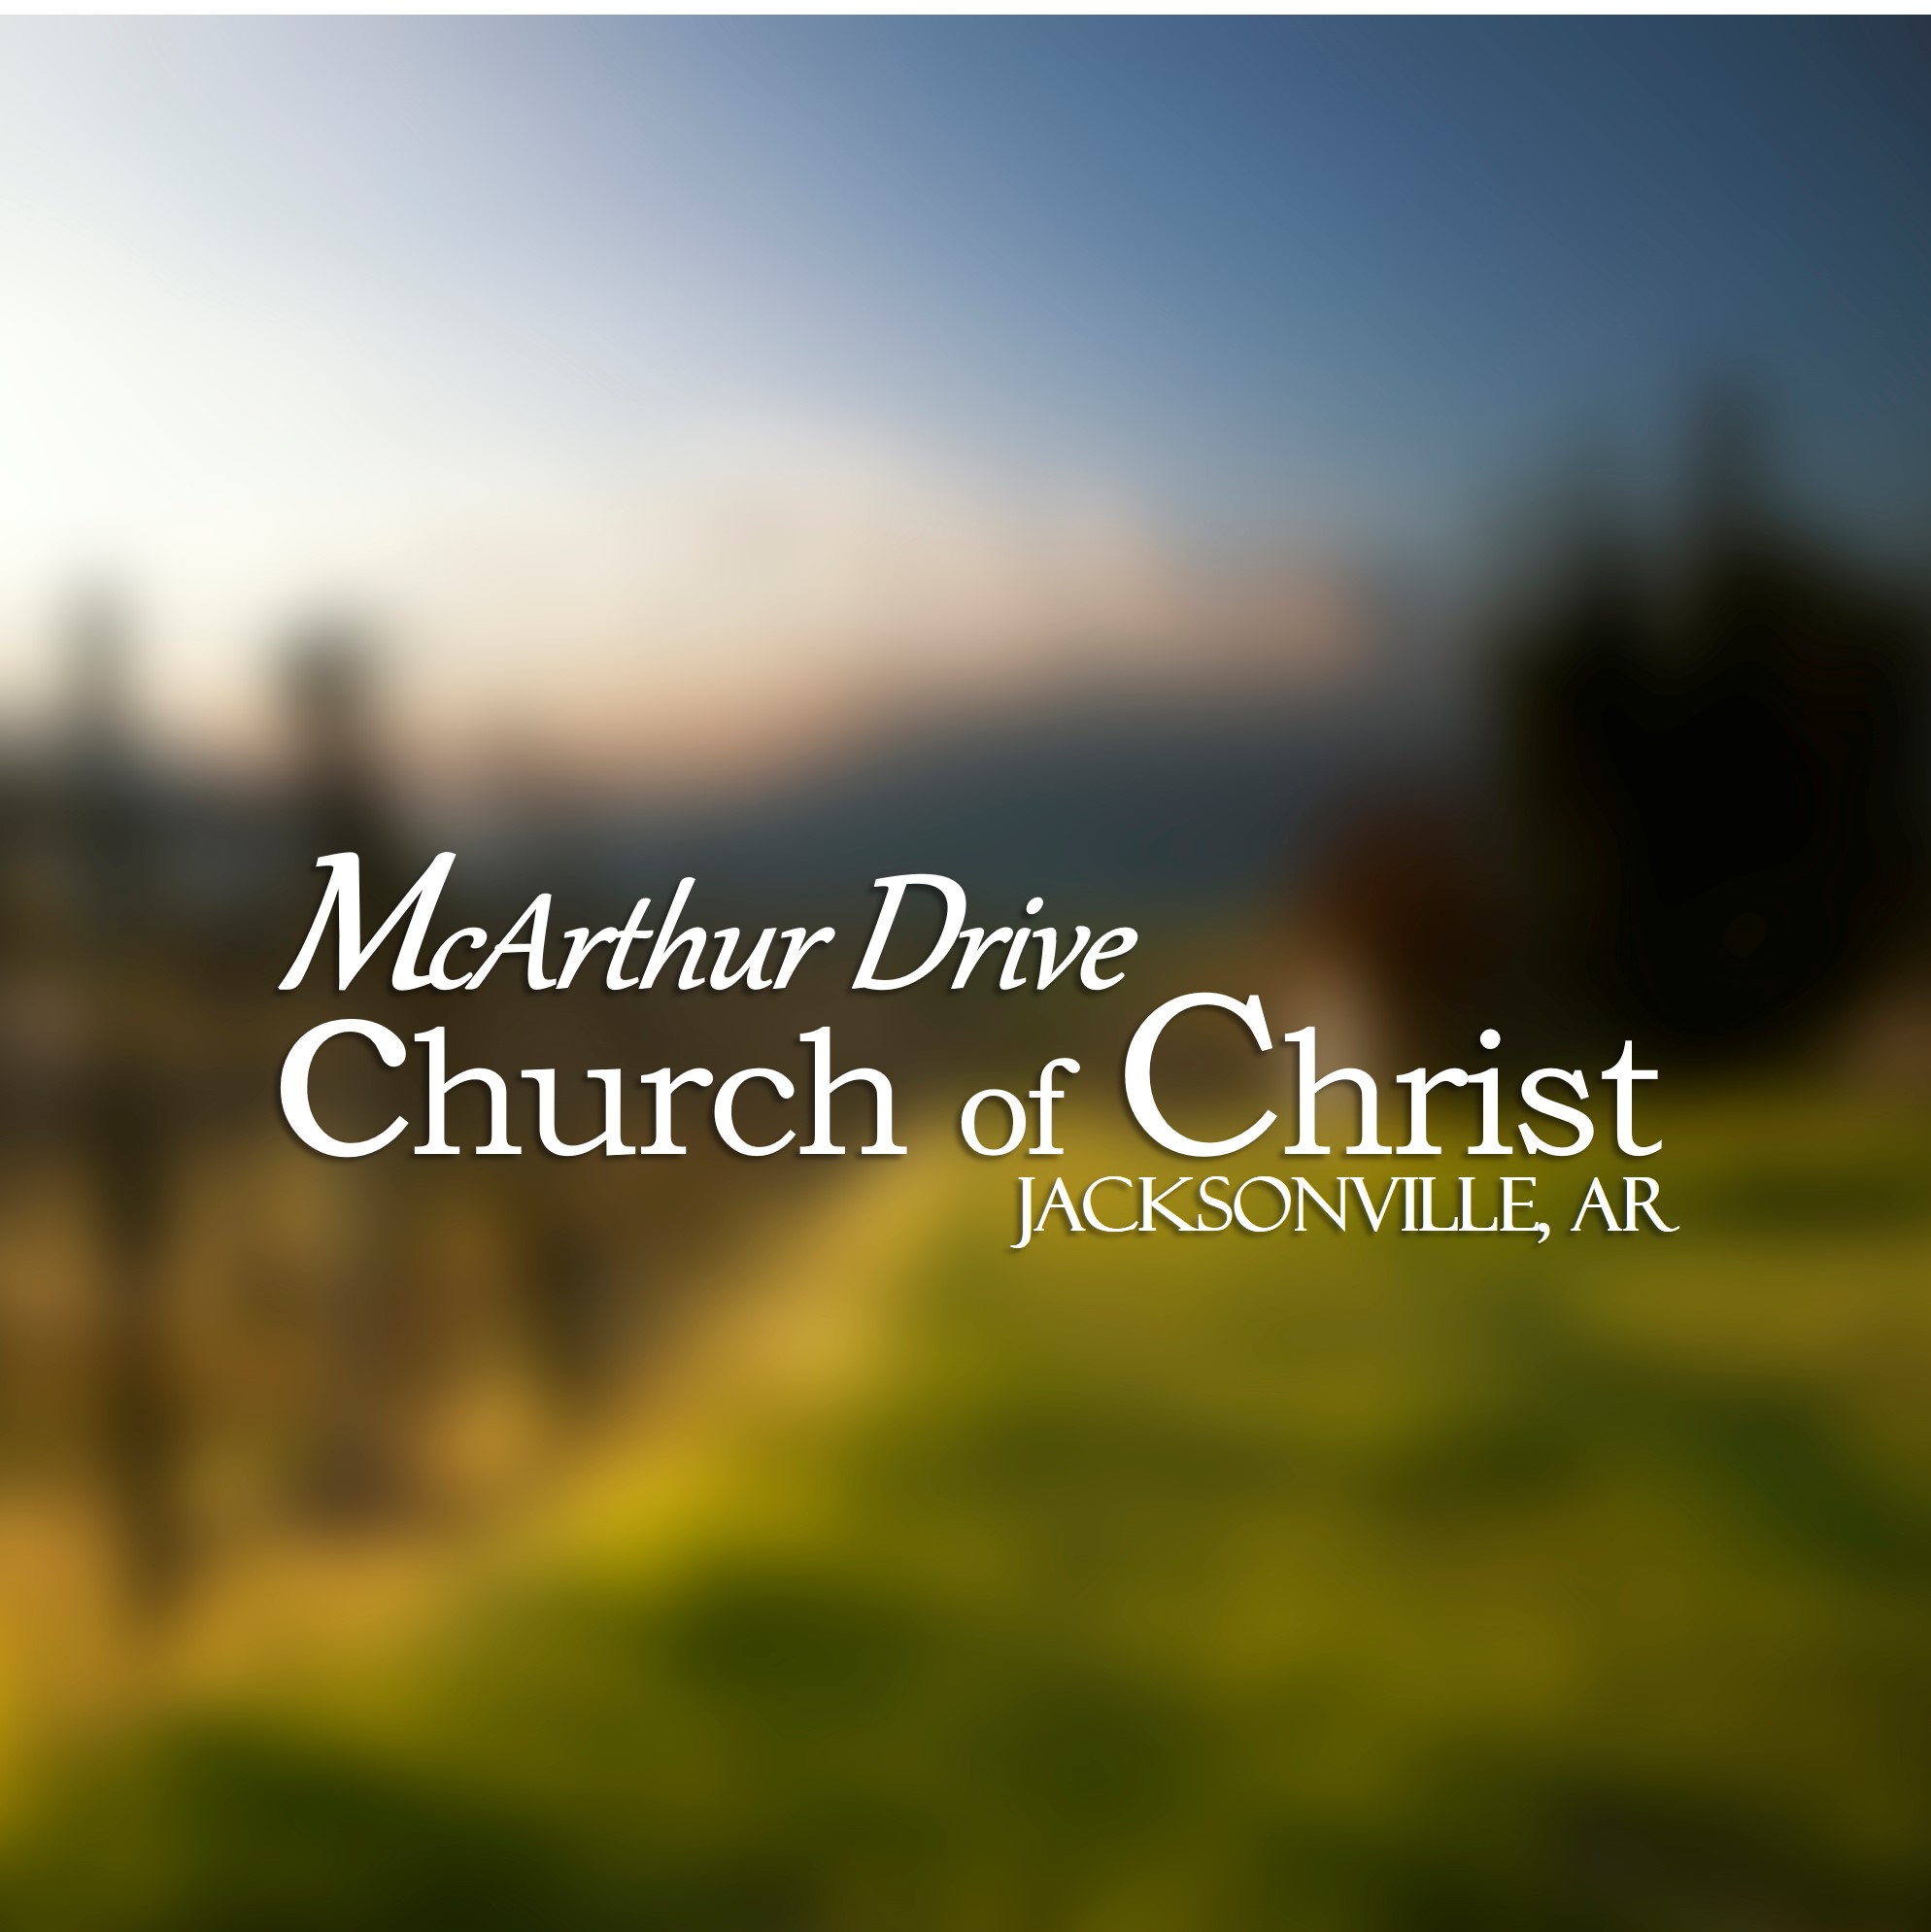 McArthur Drive church of Christ